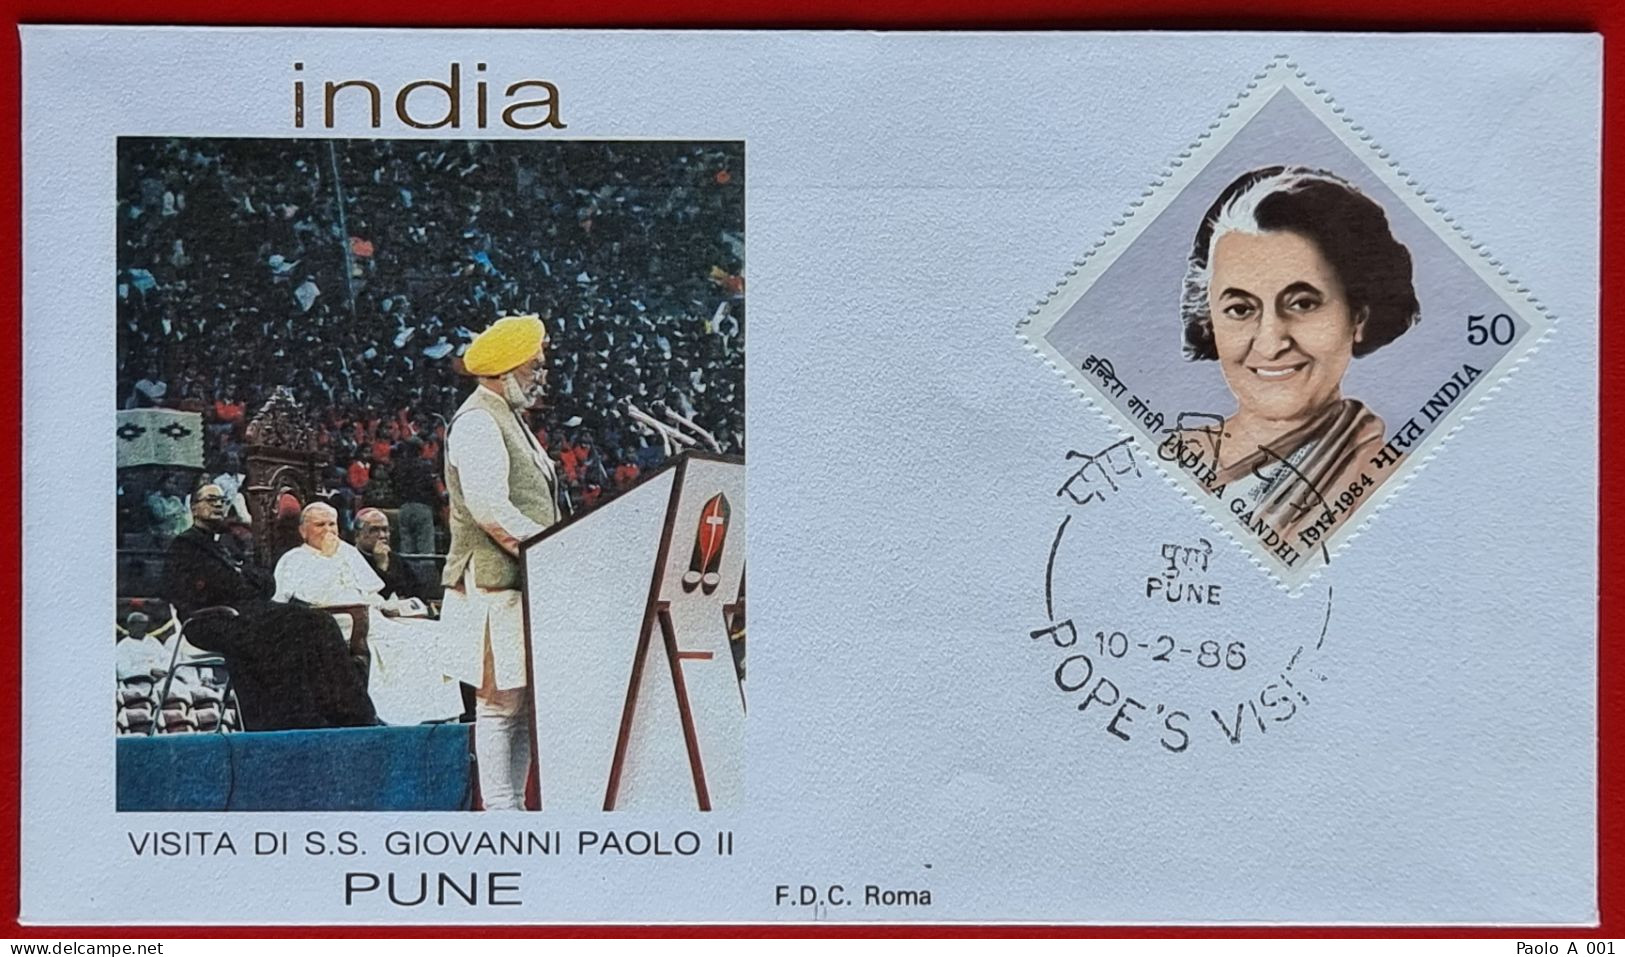 INDIA 1986 PUNE VISIT POPE JOHN PAUL II VISITA PAPA GIOVANNI PAOLO II STAMP WITH INDIRA GANDHI - Briefe U. Dokumente